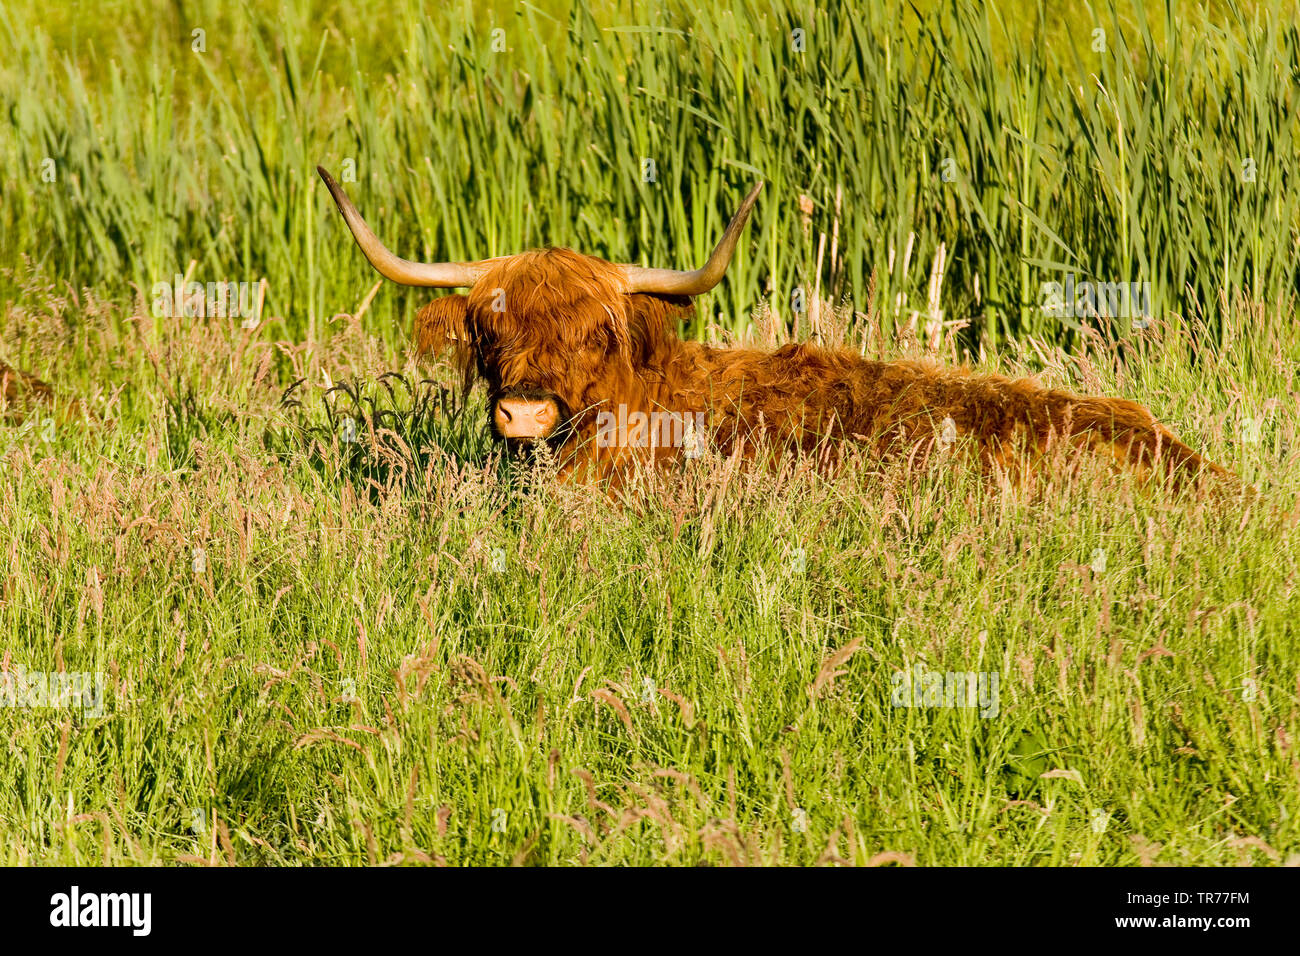 Scottish Highland cattle, Kyloe, Highland vache, Heelan coo (Bos primigenius f. taurus), couché dans l'herbe, Pays-Bas, l'Overijssel, Parc National de Weerribben-Wieden Banque D'Images